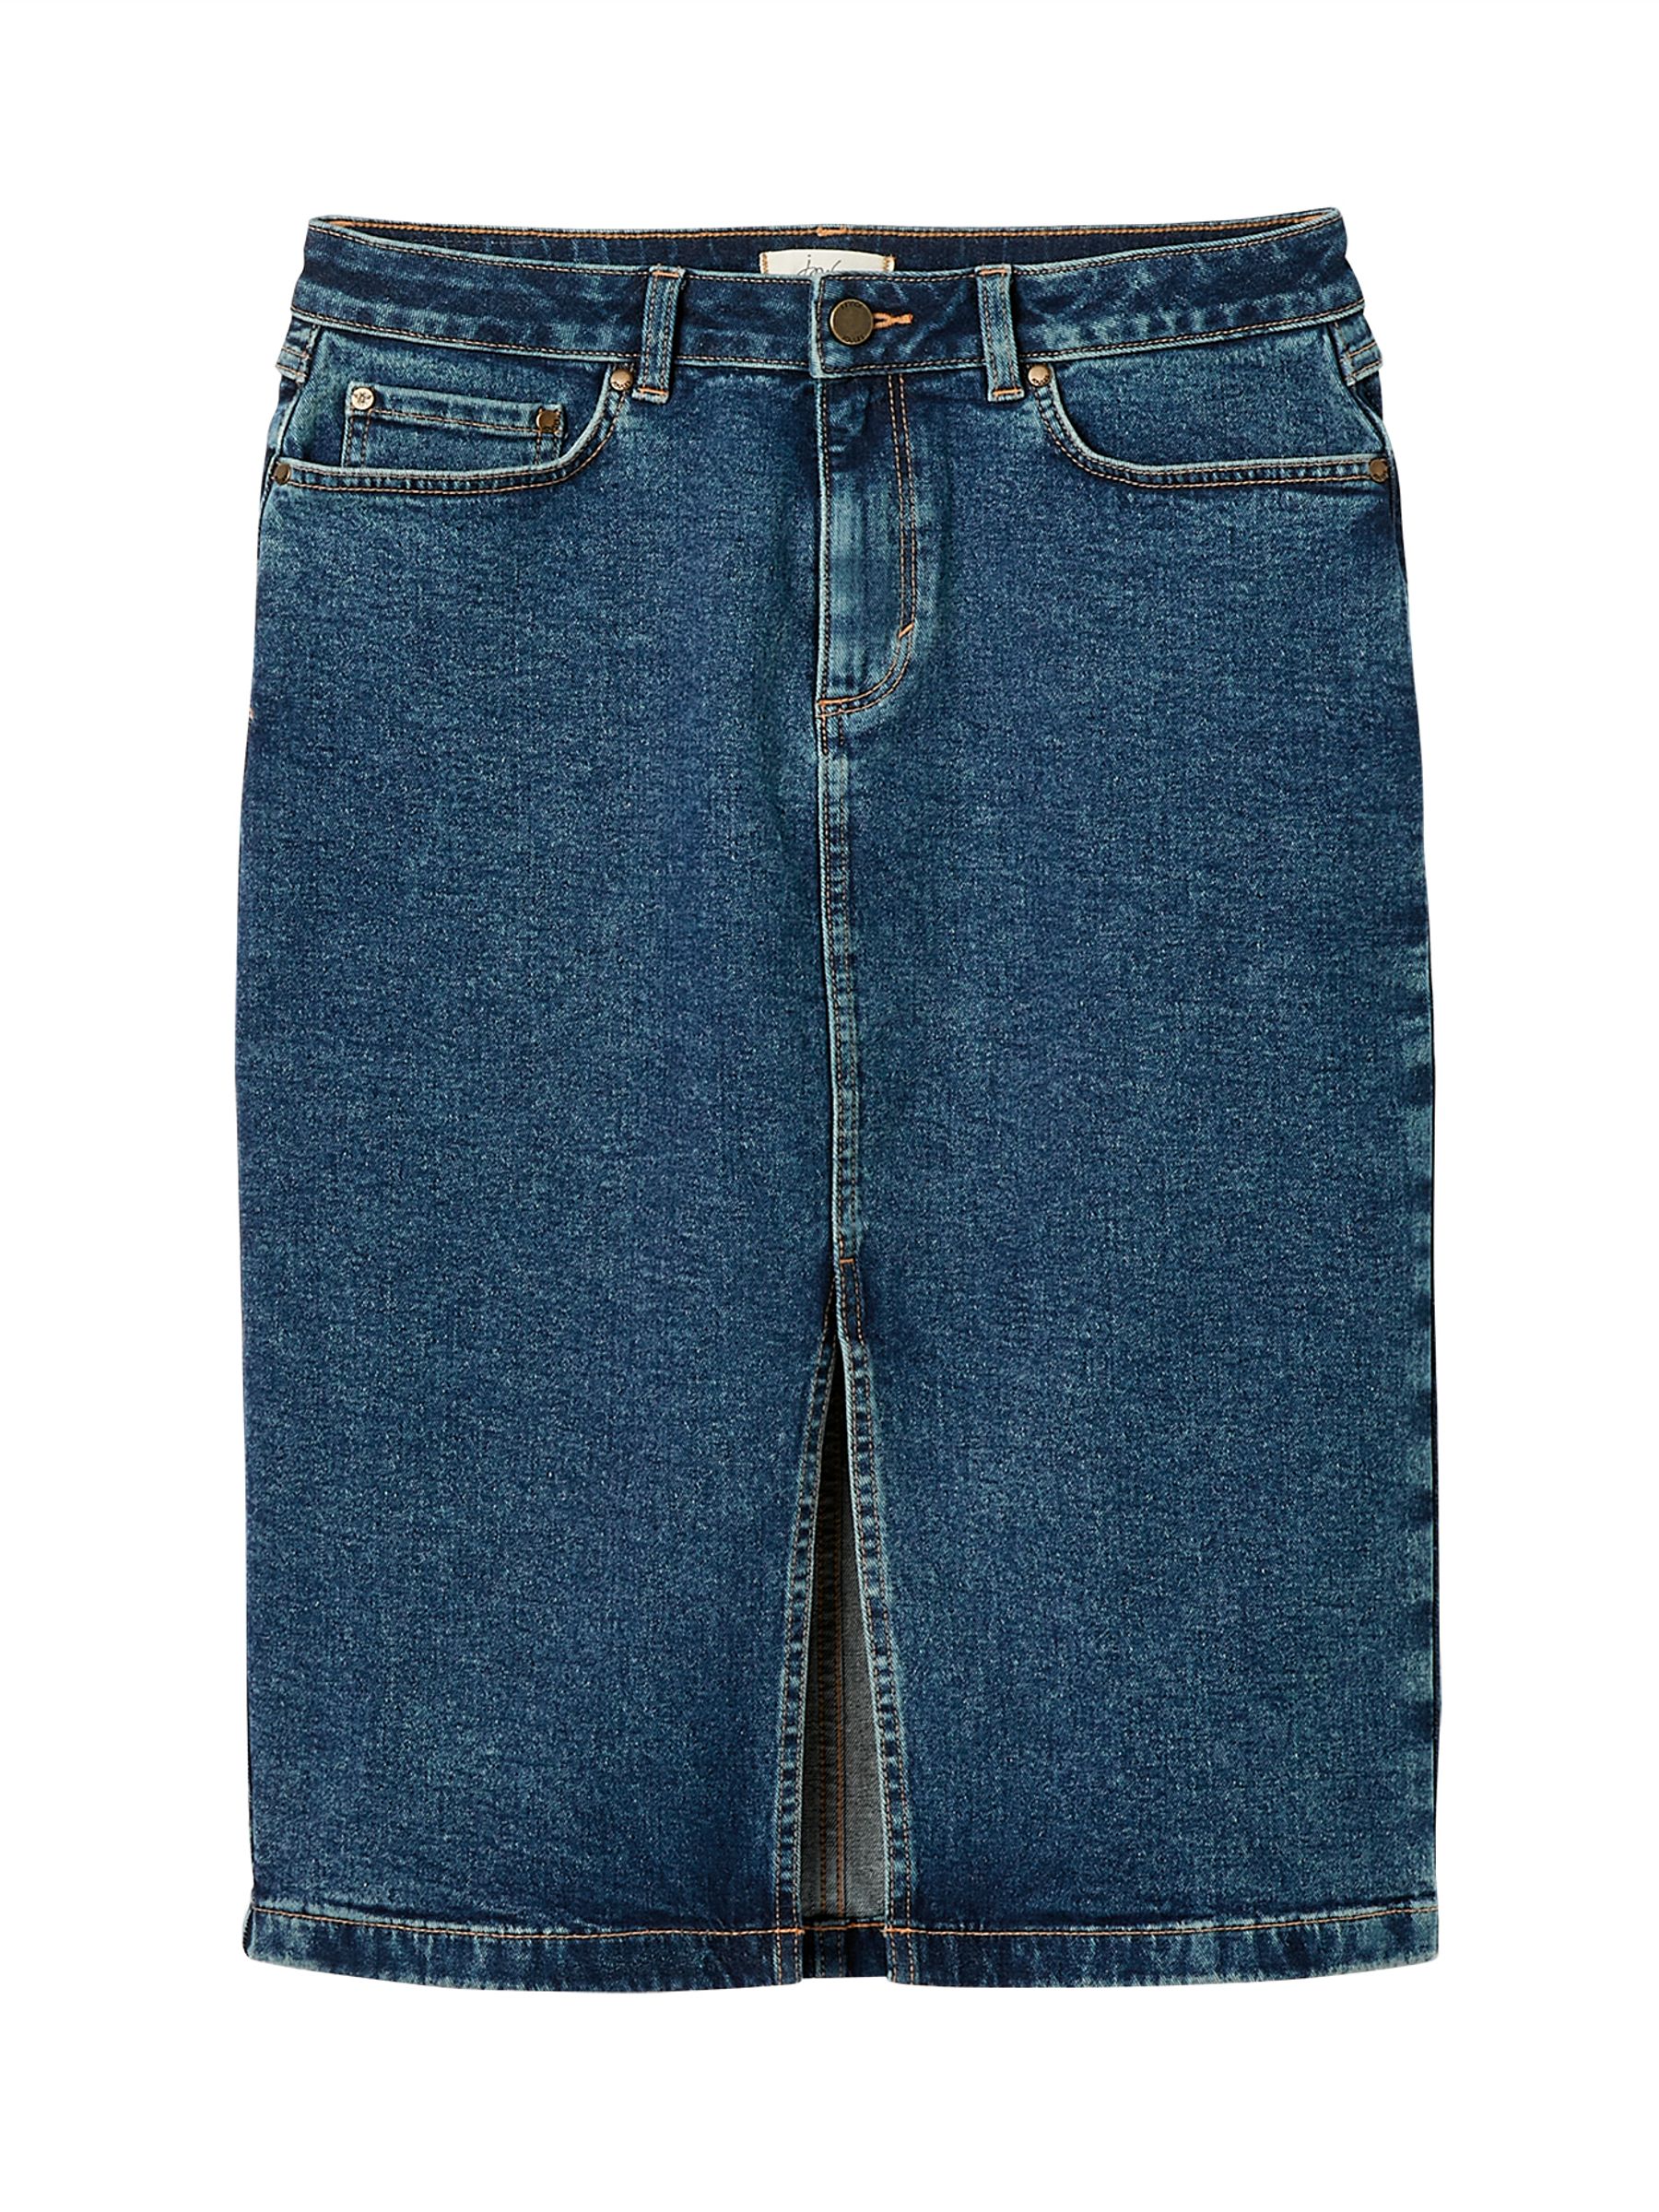 Buy Taylor Blue Denim Front Split Skirt from the Joules online shop